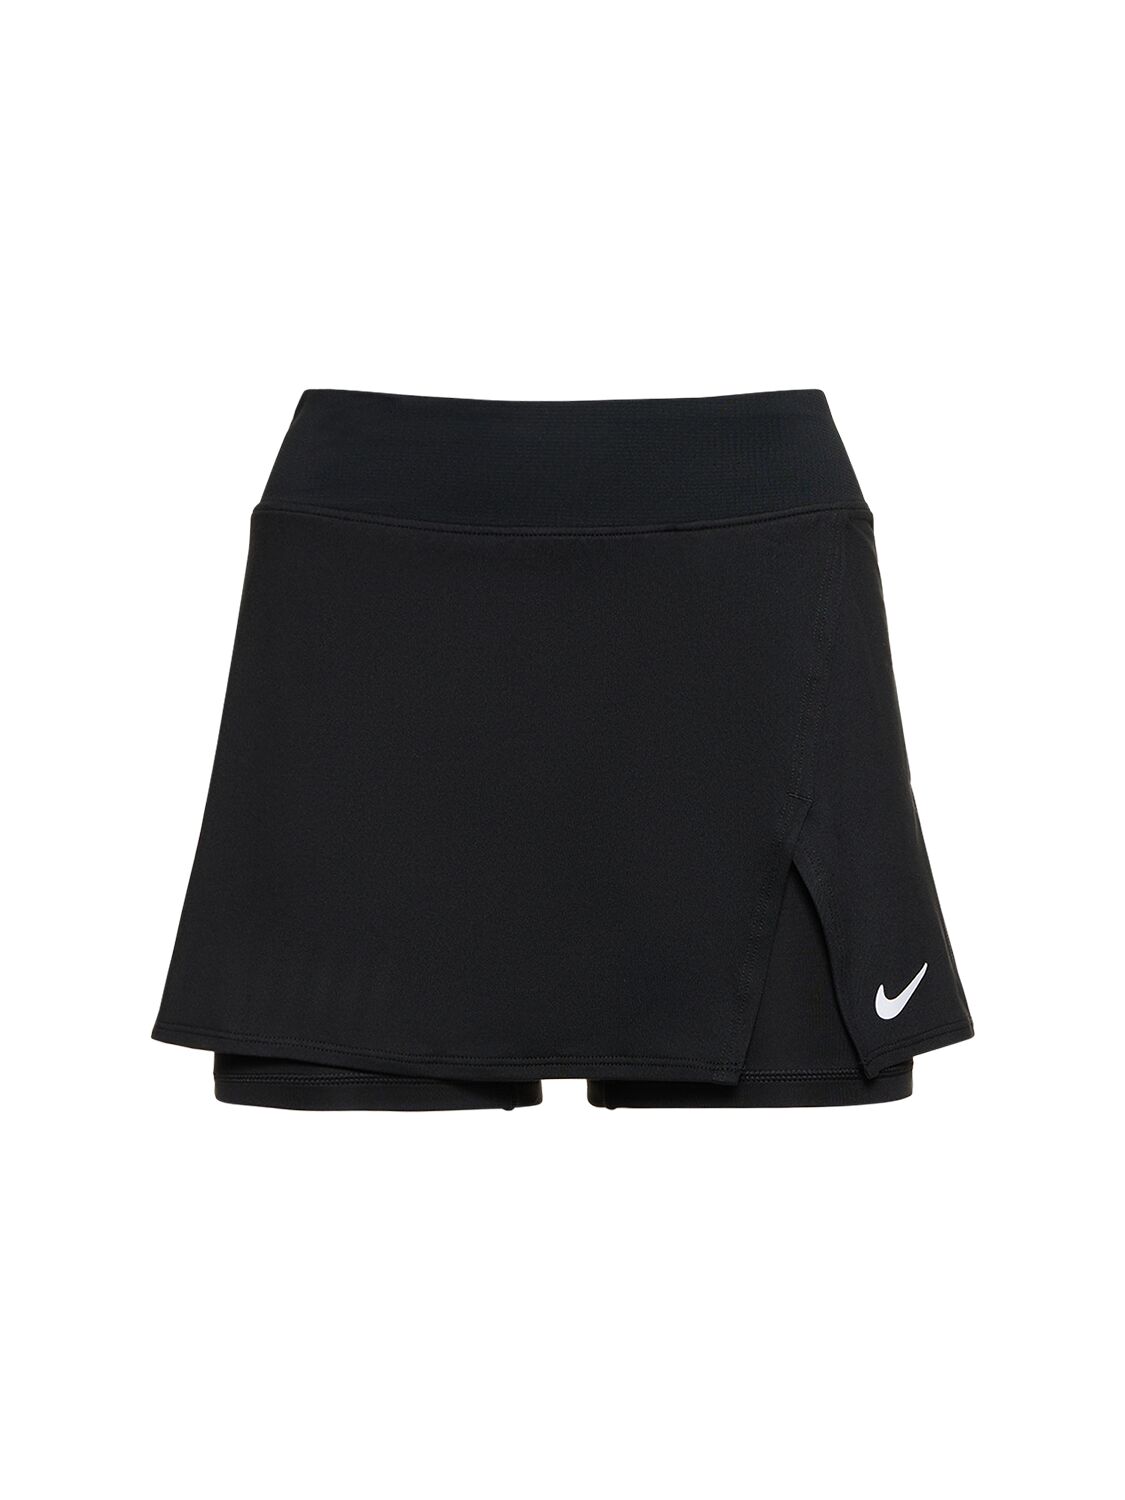 Nike Dri-fit Tennis Skirt In Black